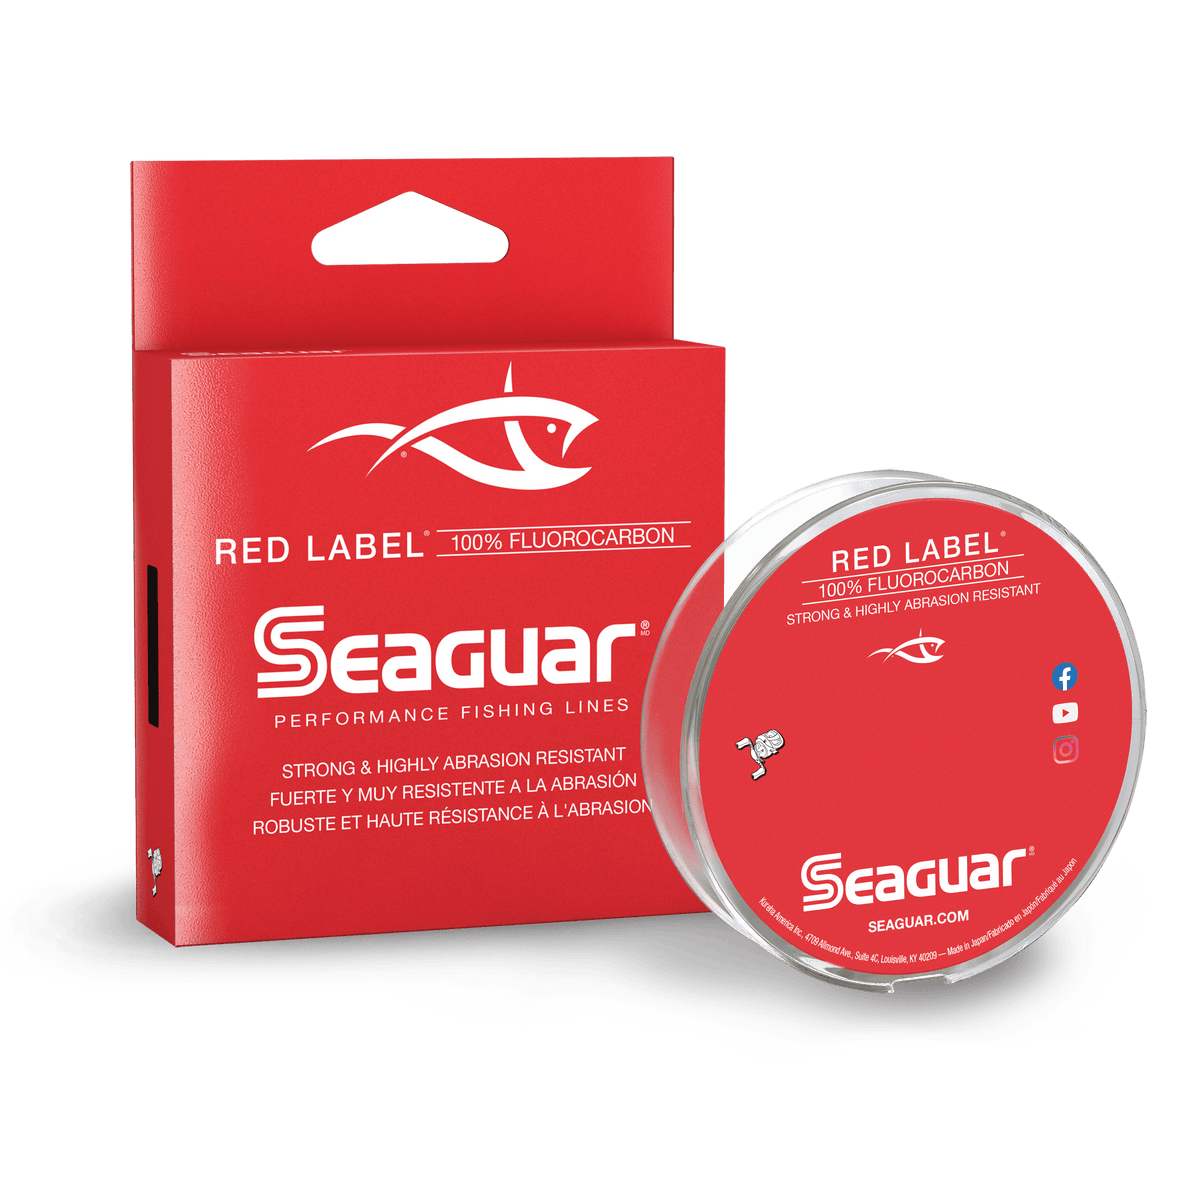 Seaguar 50PL25 Pink Label 50lb Test Fluorocarbon Fishing Line (25 Yards)